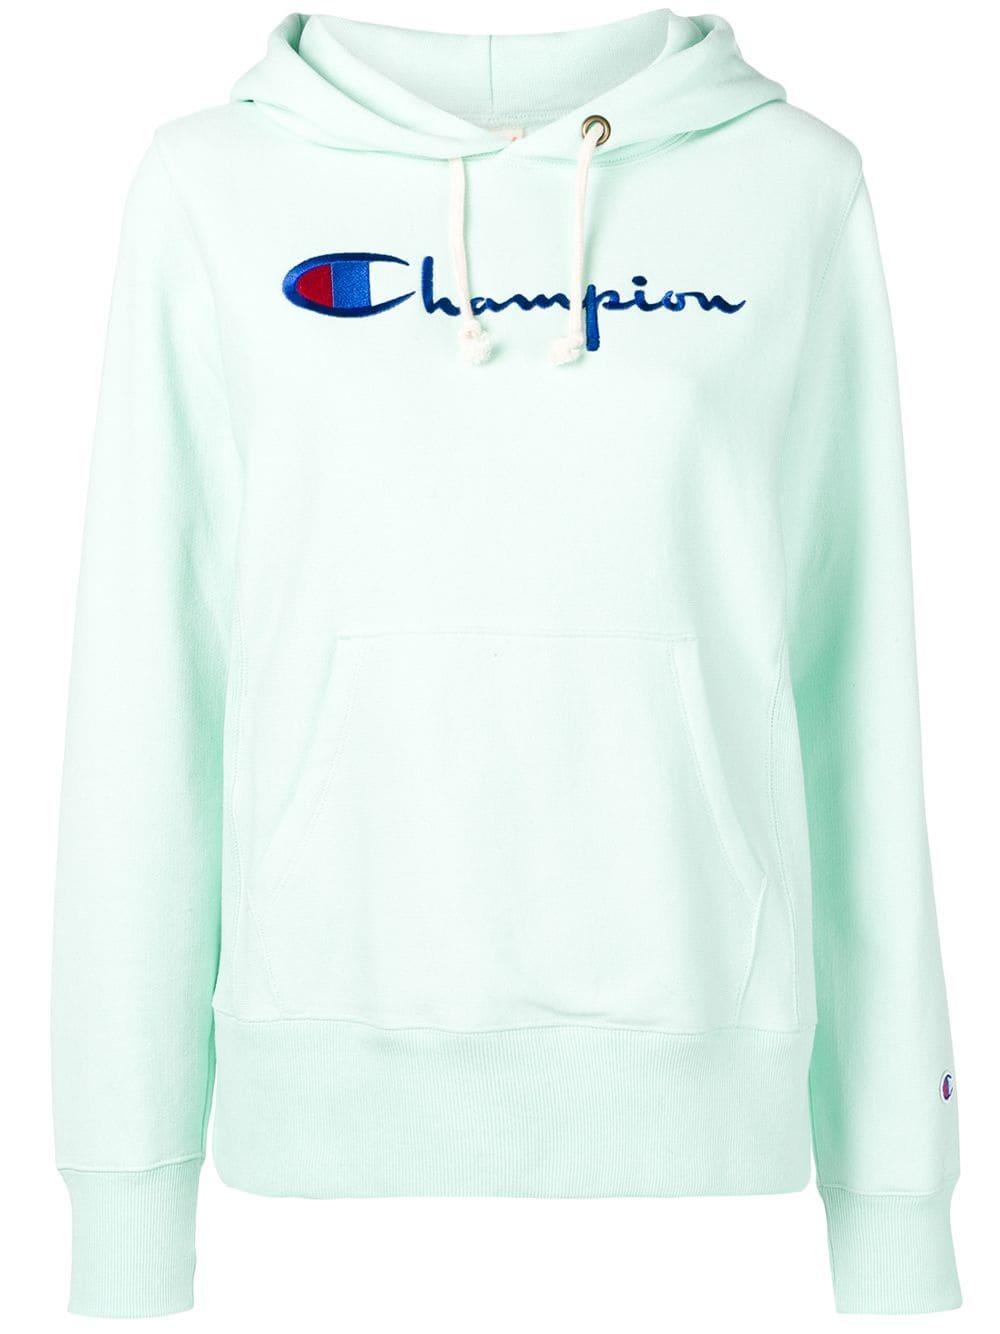 champion daisy sweatshirt